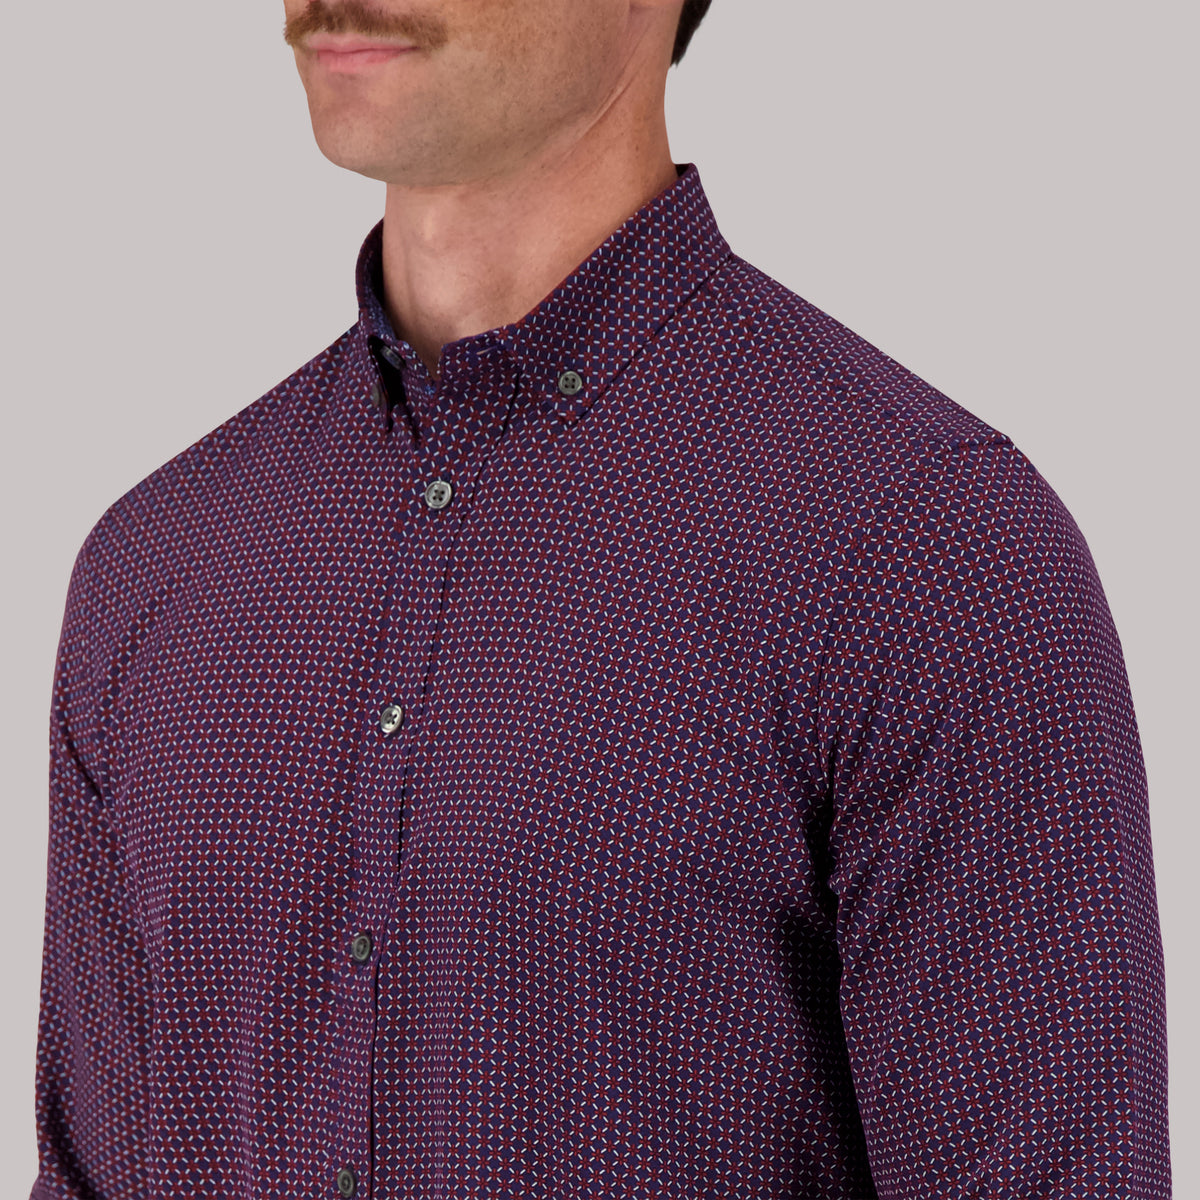 Long Sleeve 4 Way Geometric Print Sport Woven Shirt in Burgundy